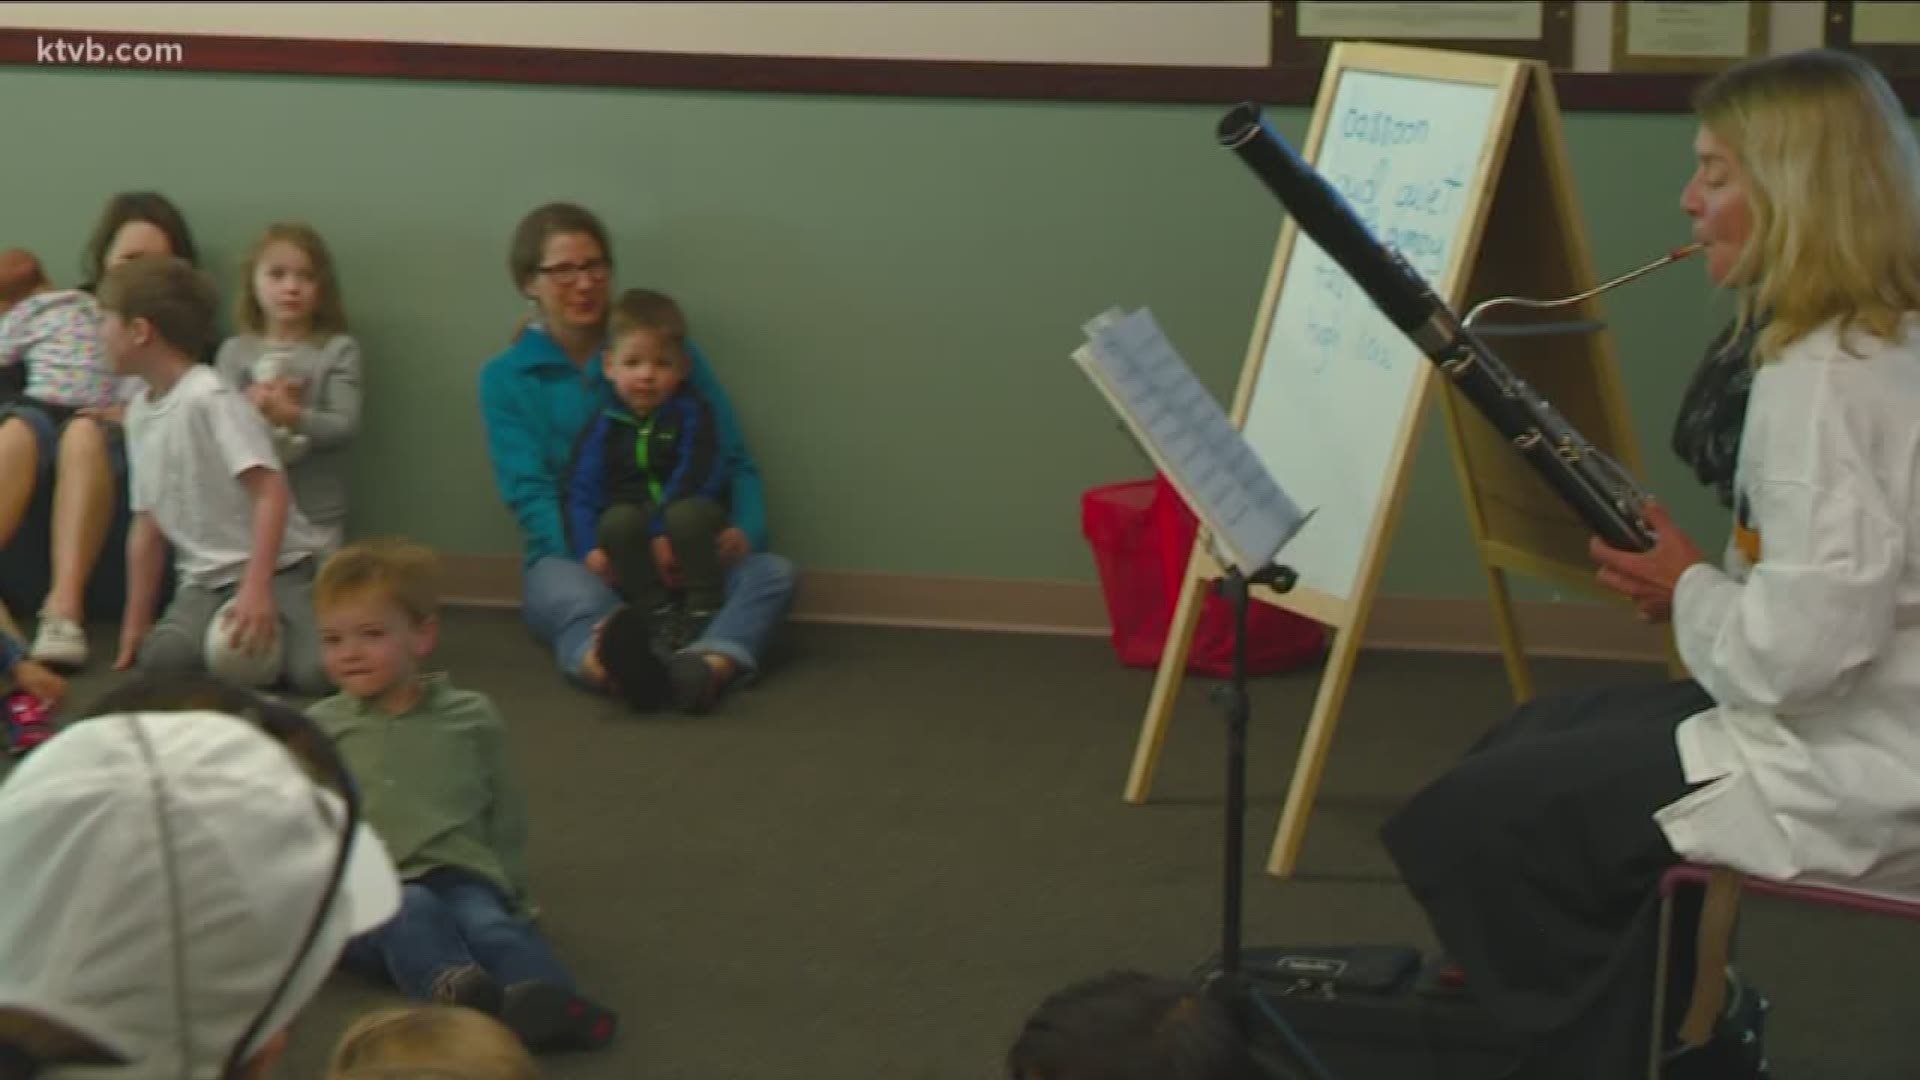 Boise Philharmonic bringing music to kids.